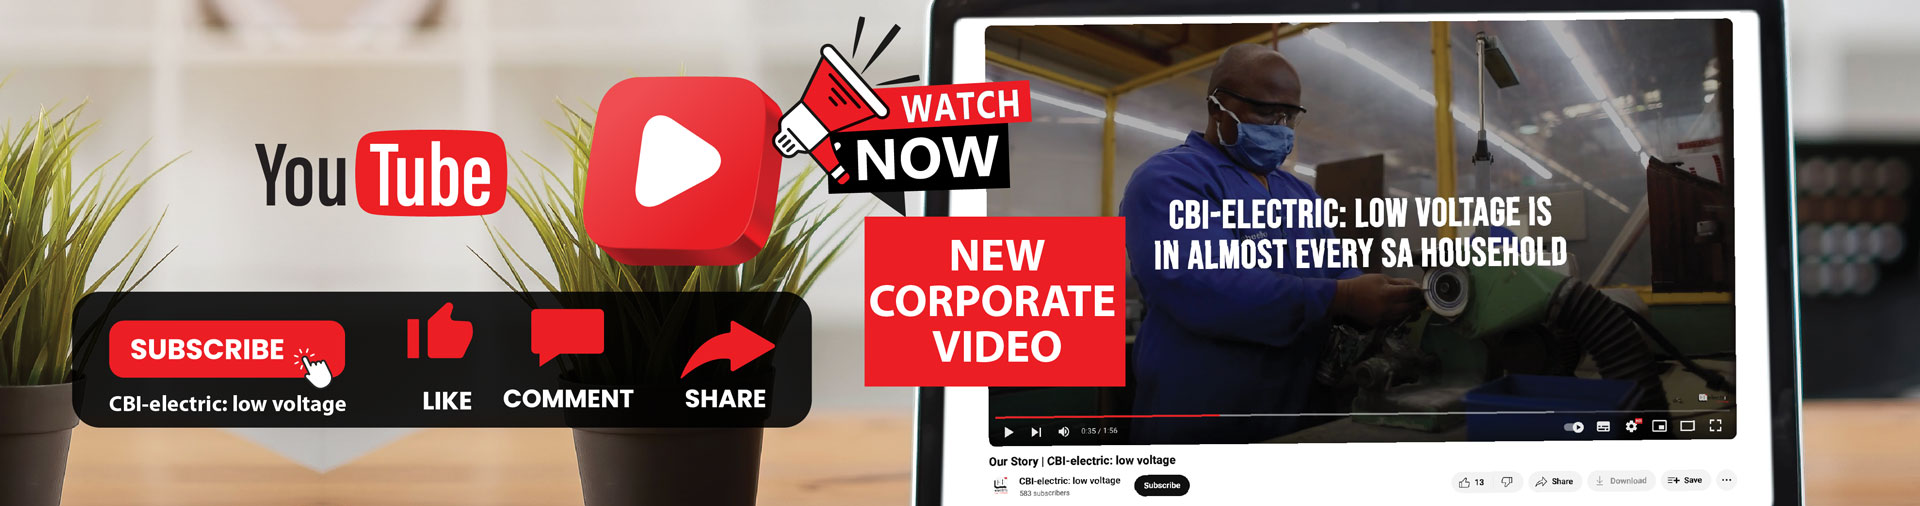 Corporate Video2